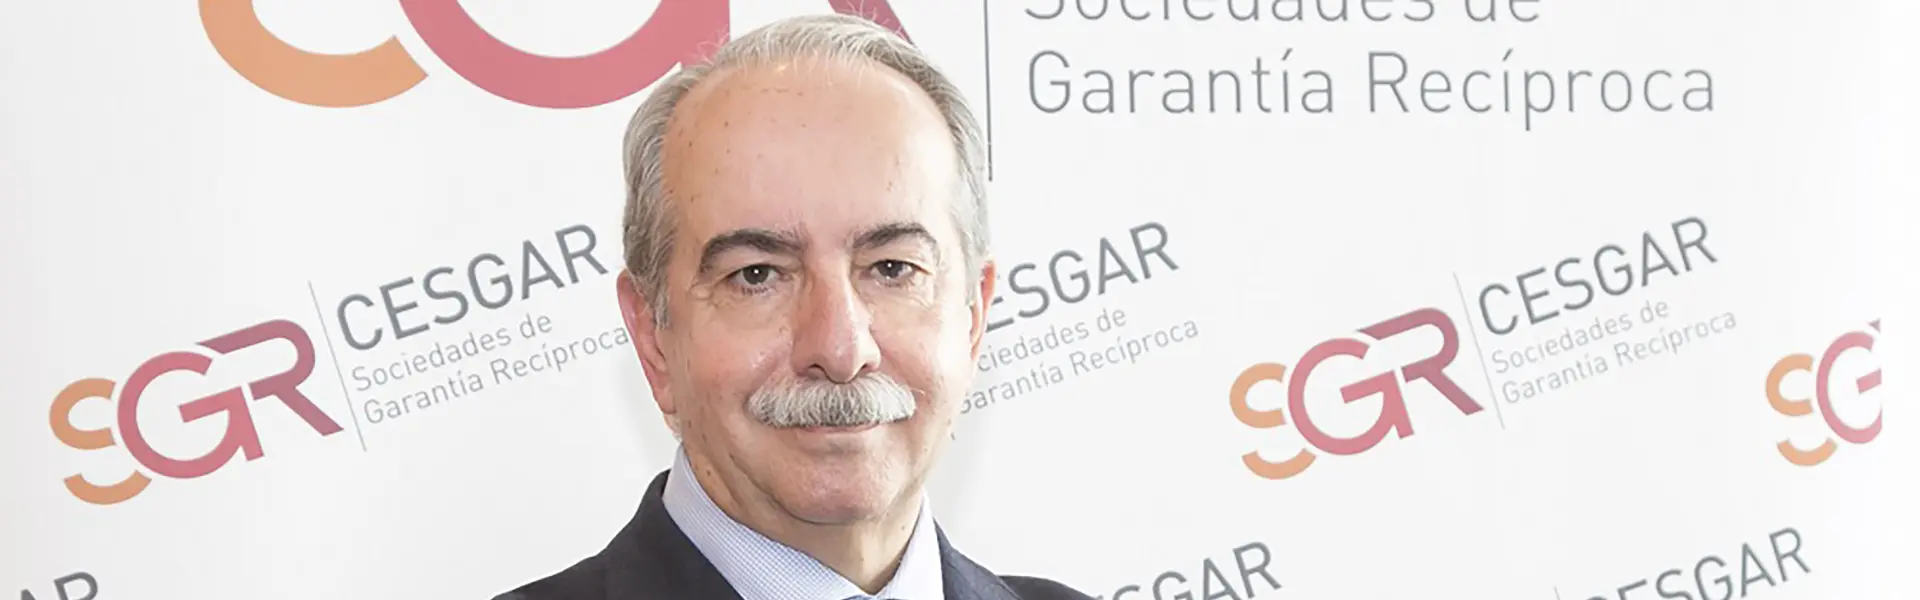 Entrevista al presidente de Cesgar Antonio Couceiro en Capital Radio hemeroteca cesgar web